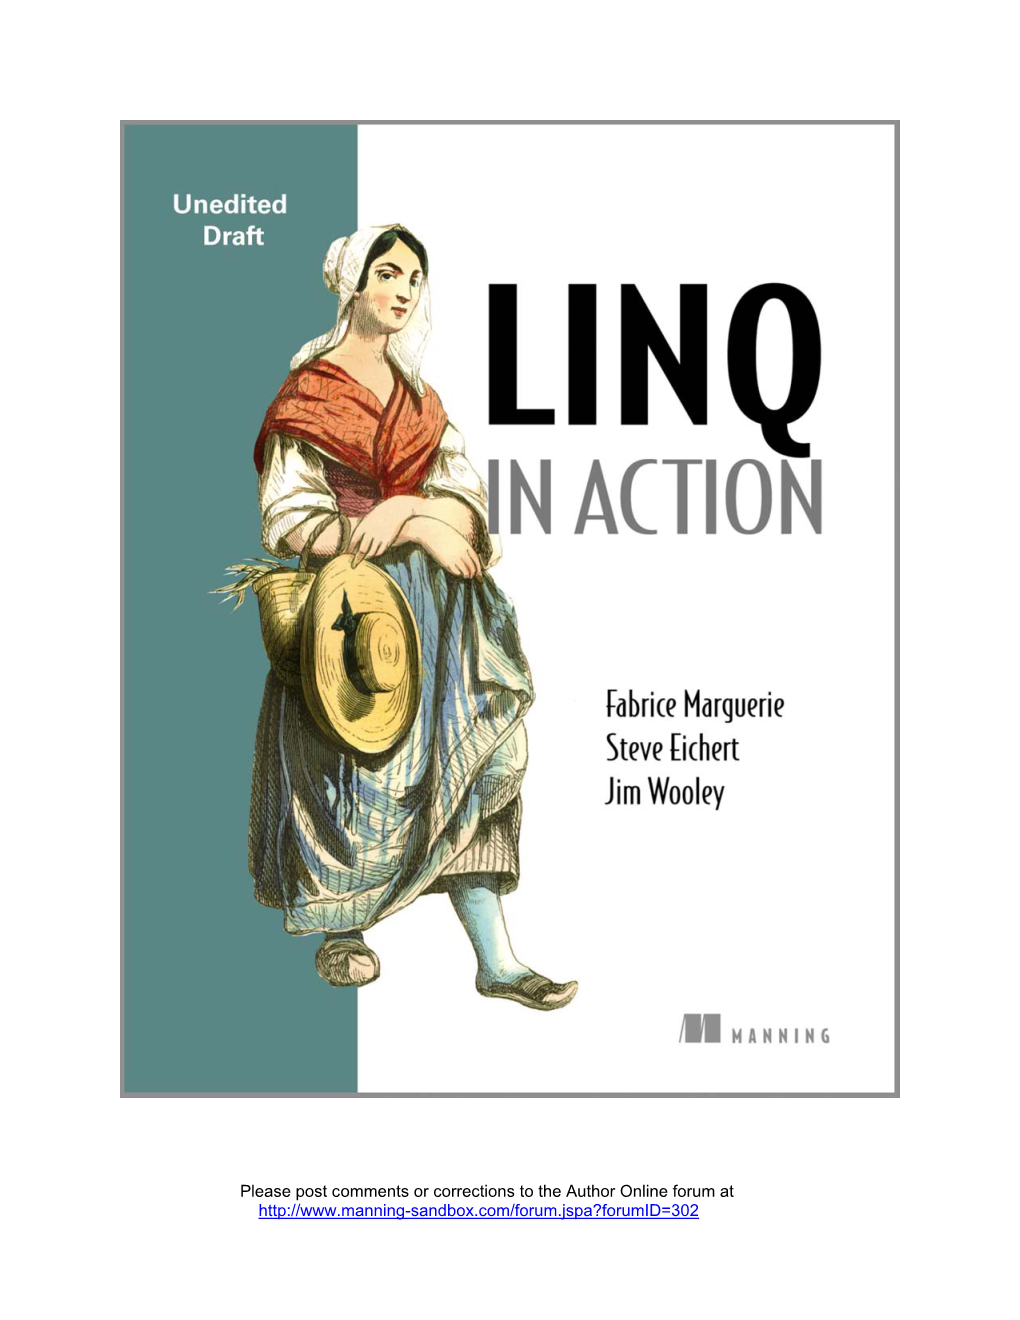 Introducing LINQ 2